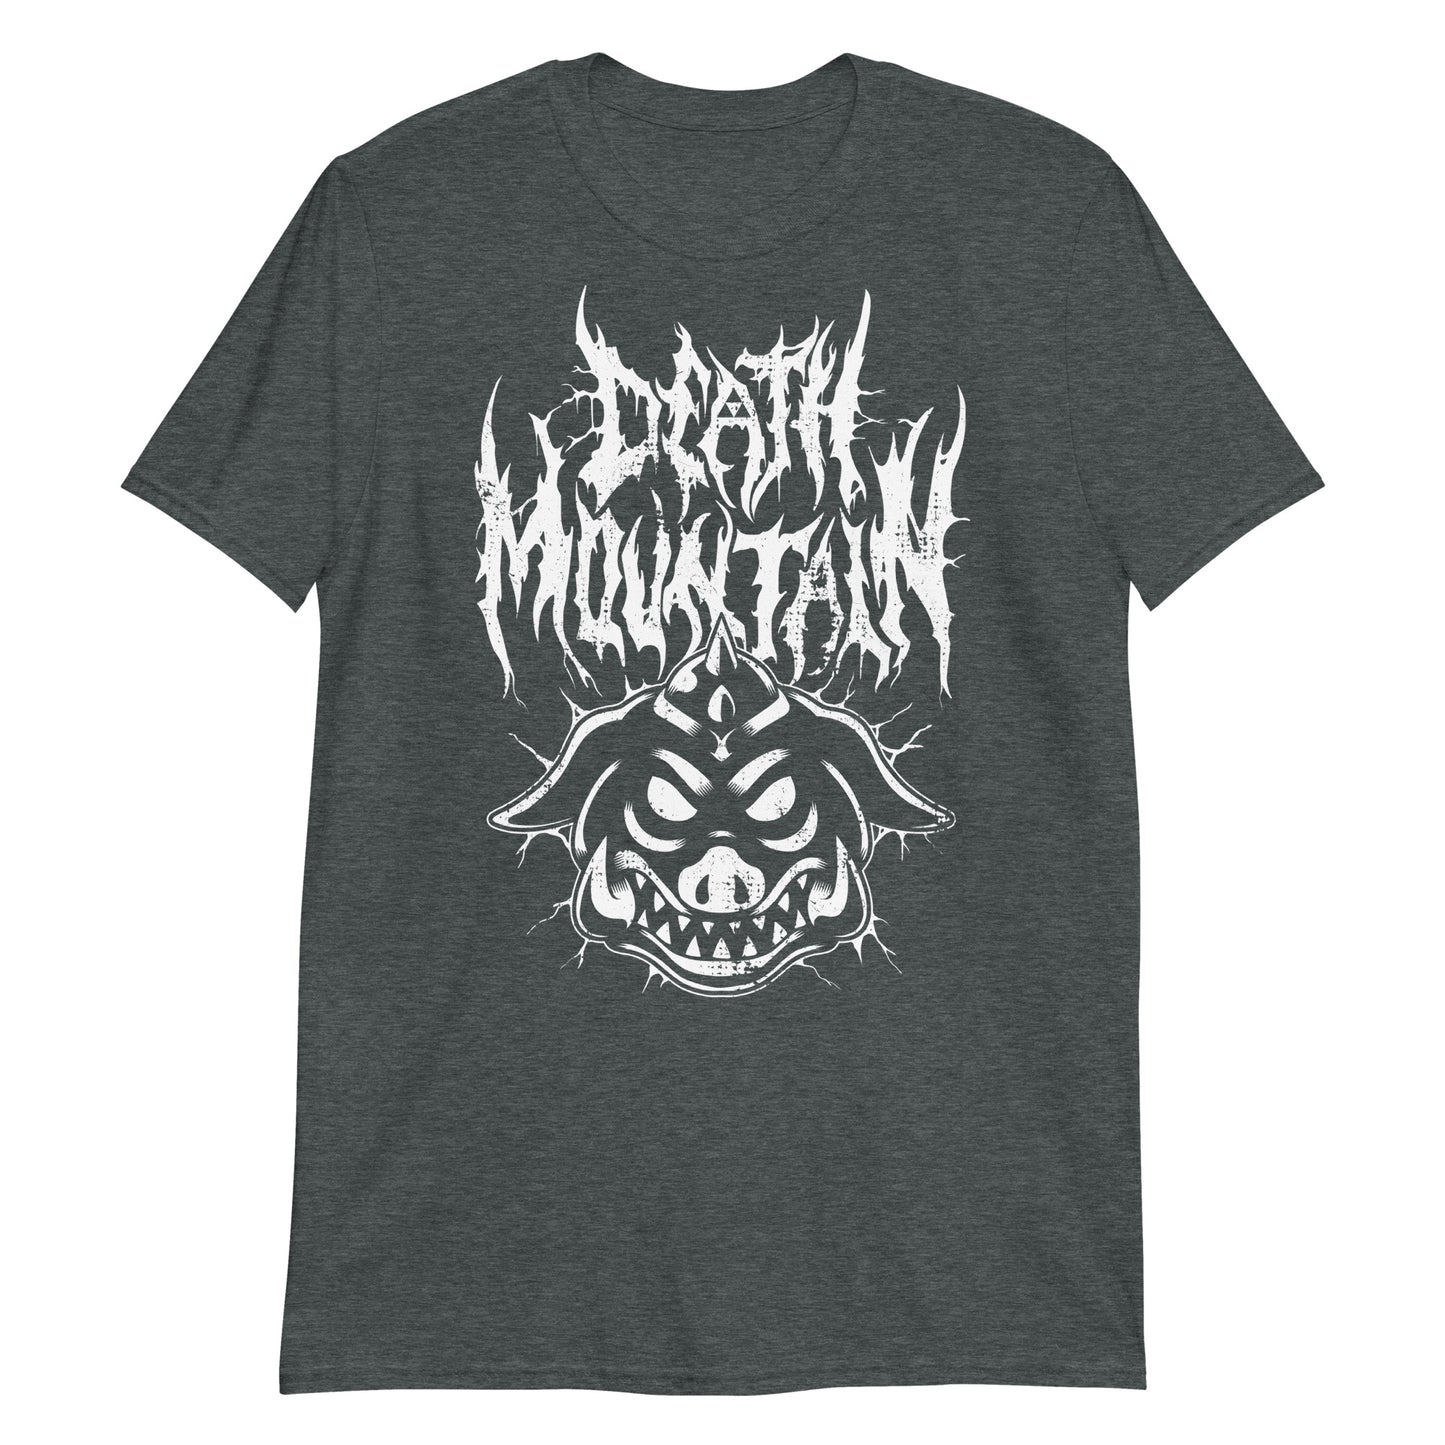 Death (Metal) Mountain t-shirt